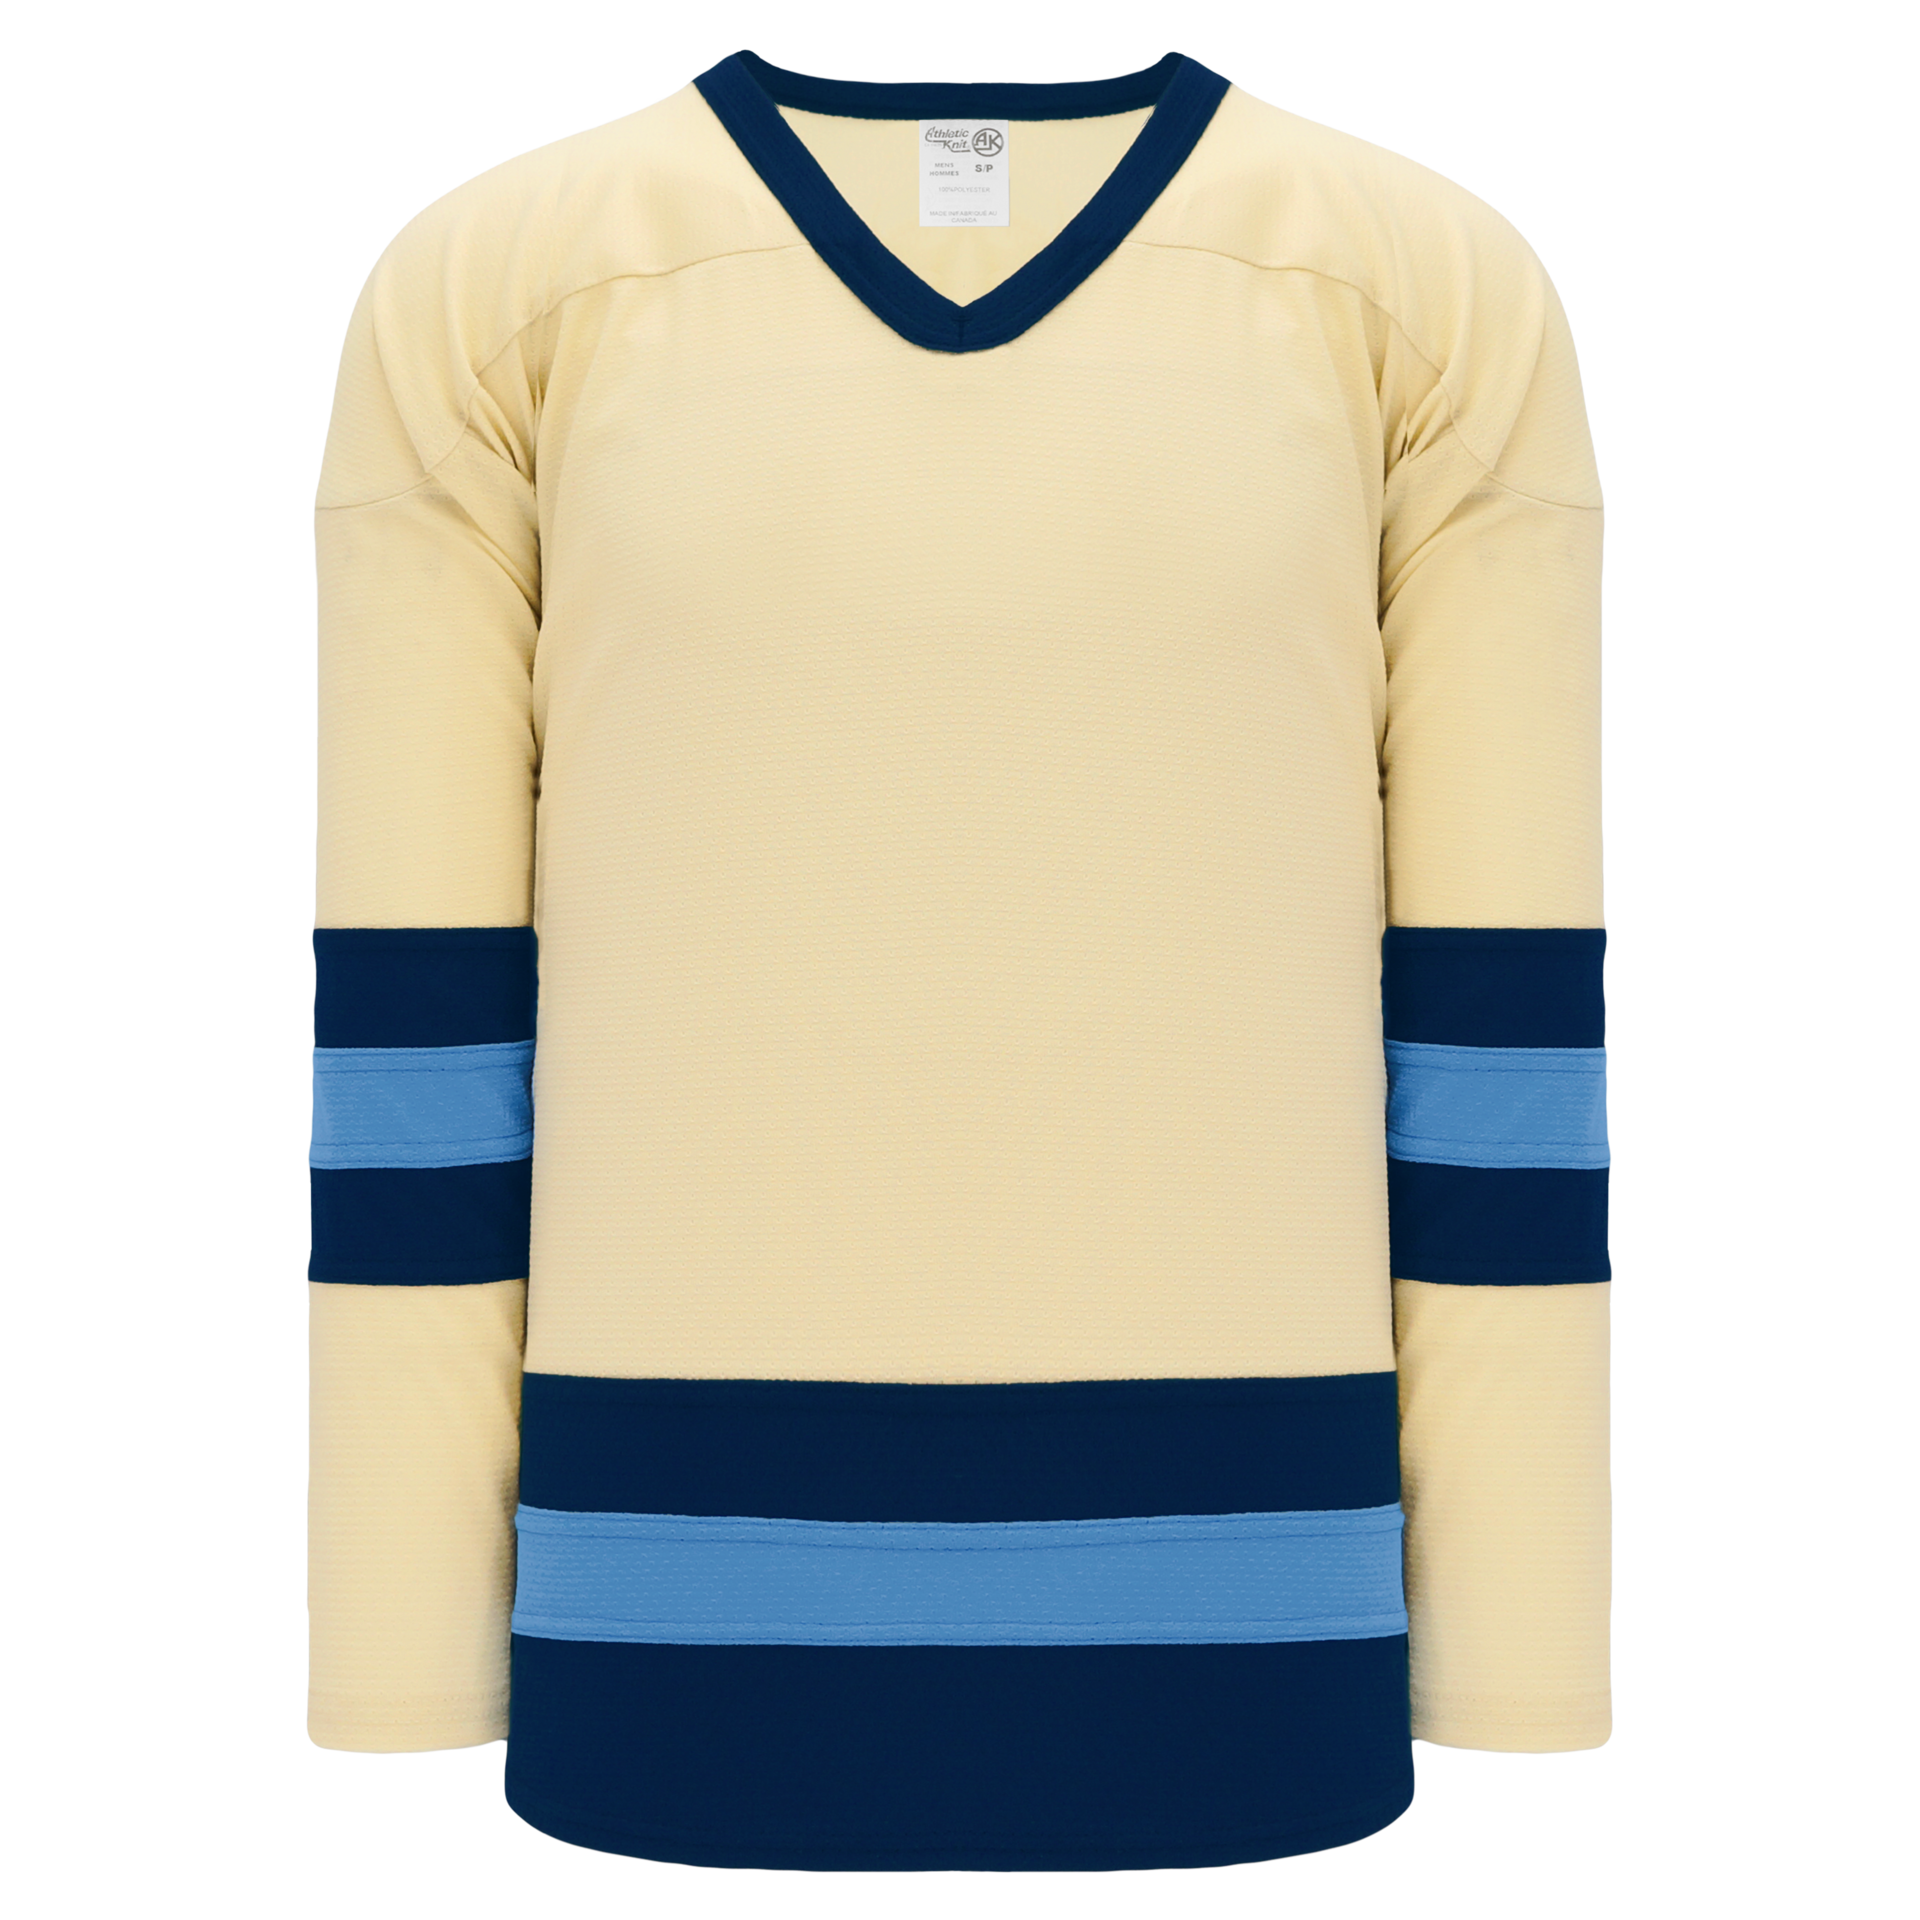 Stadium Adult Hockey Jersey - Powder Blue/Navy/White